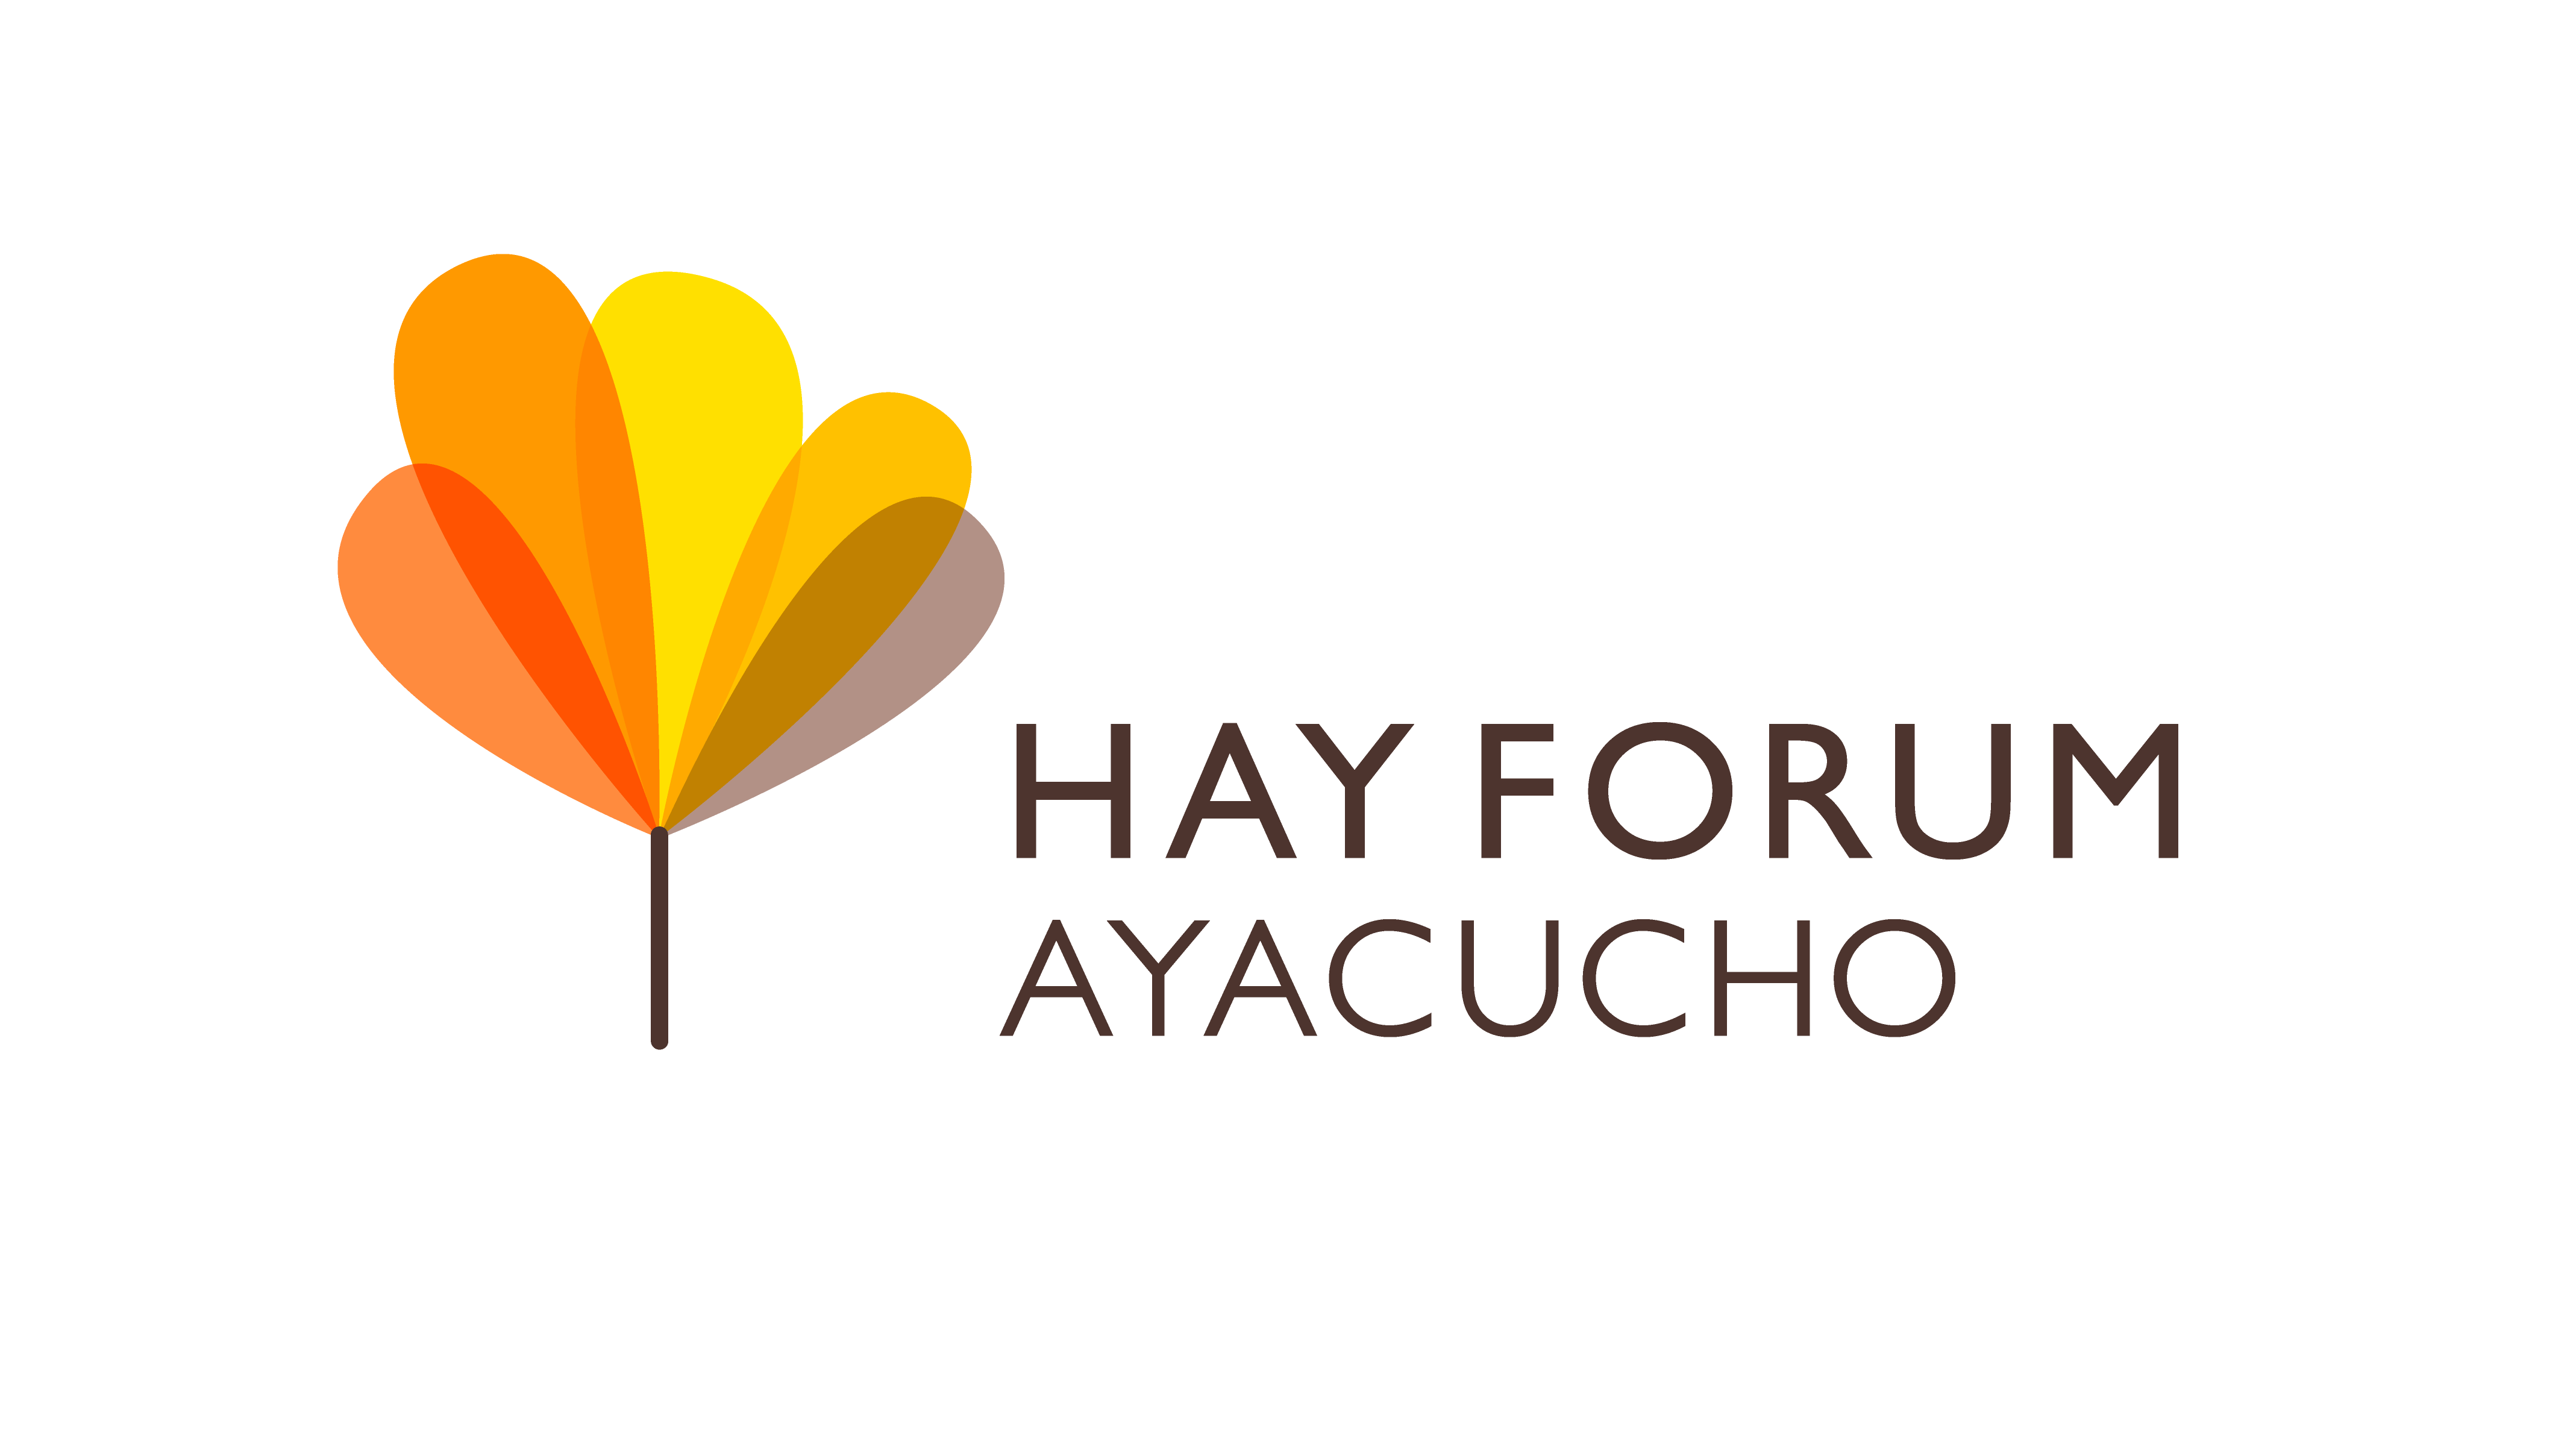 Hay Logo - Hay Festival Logos & Branding